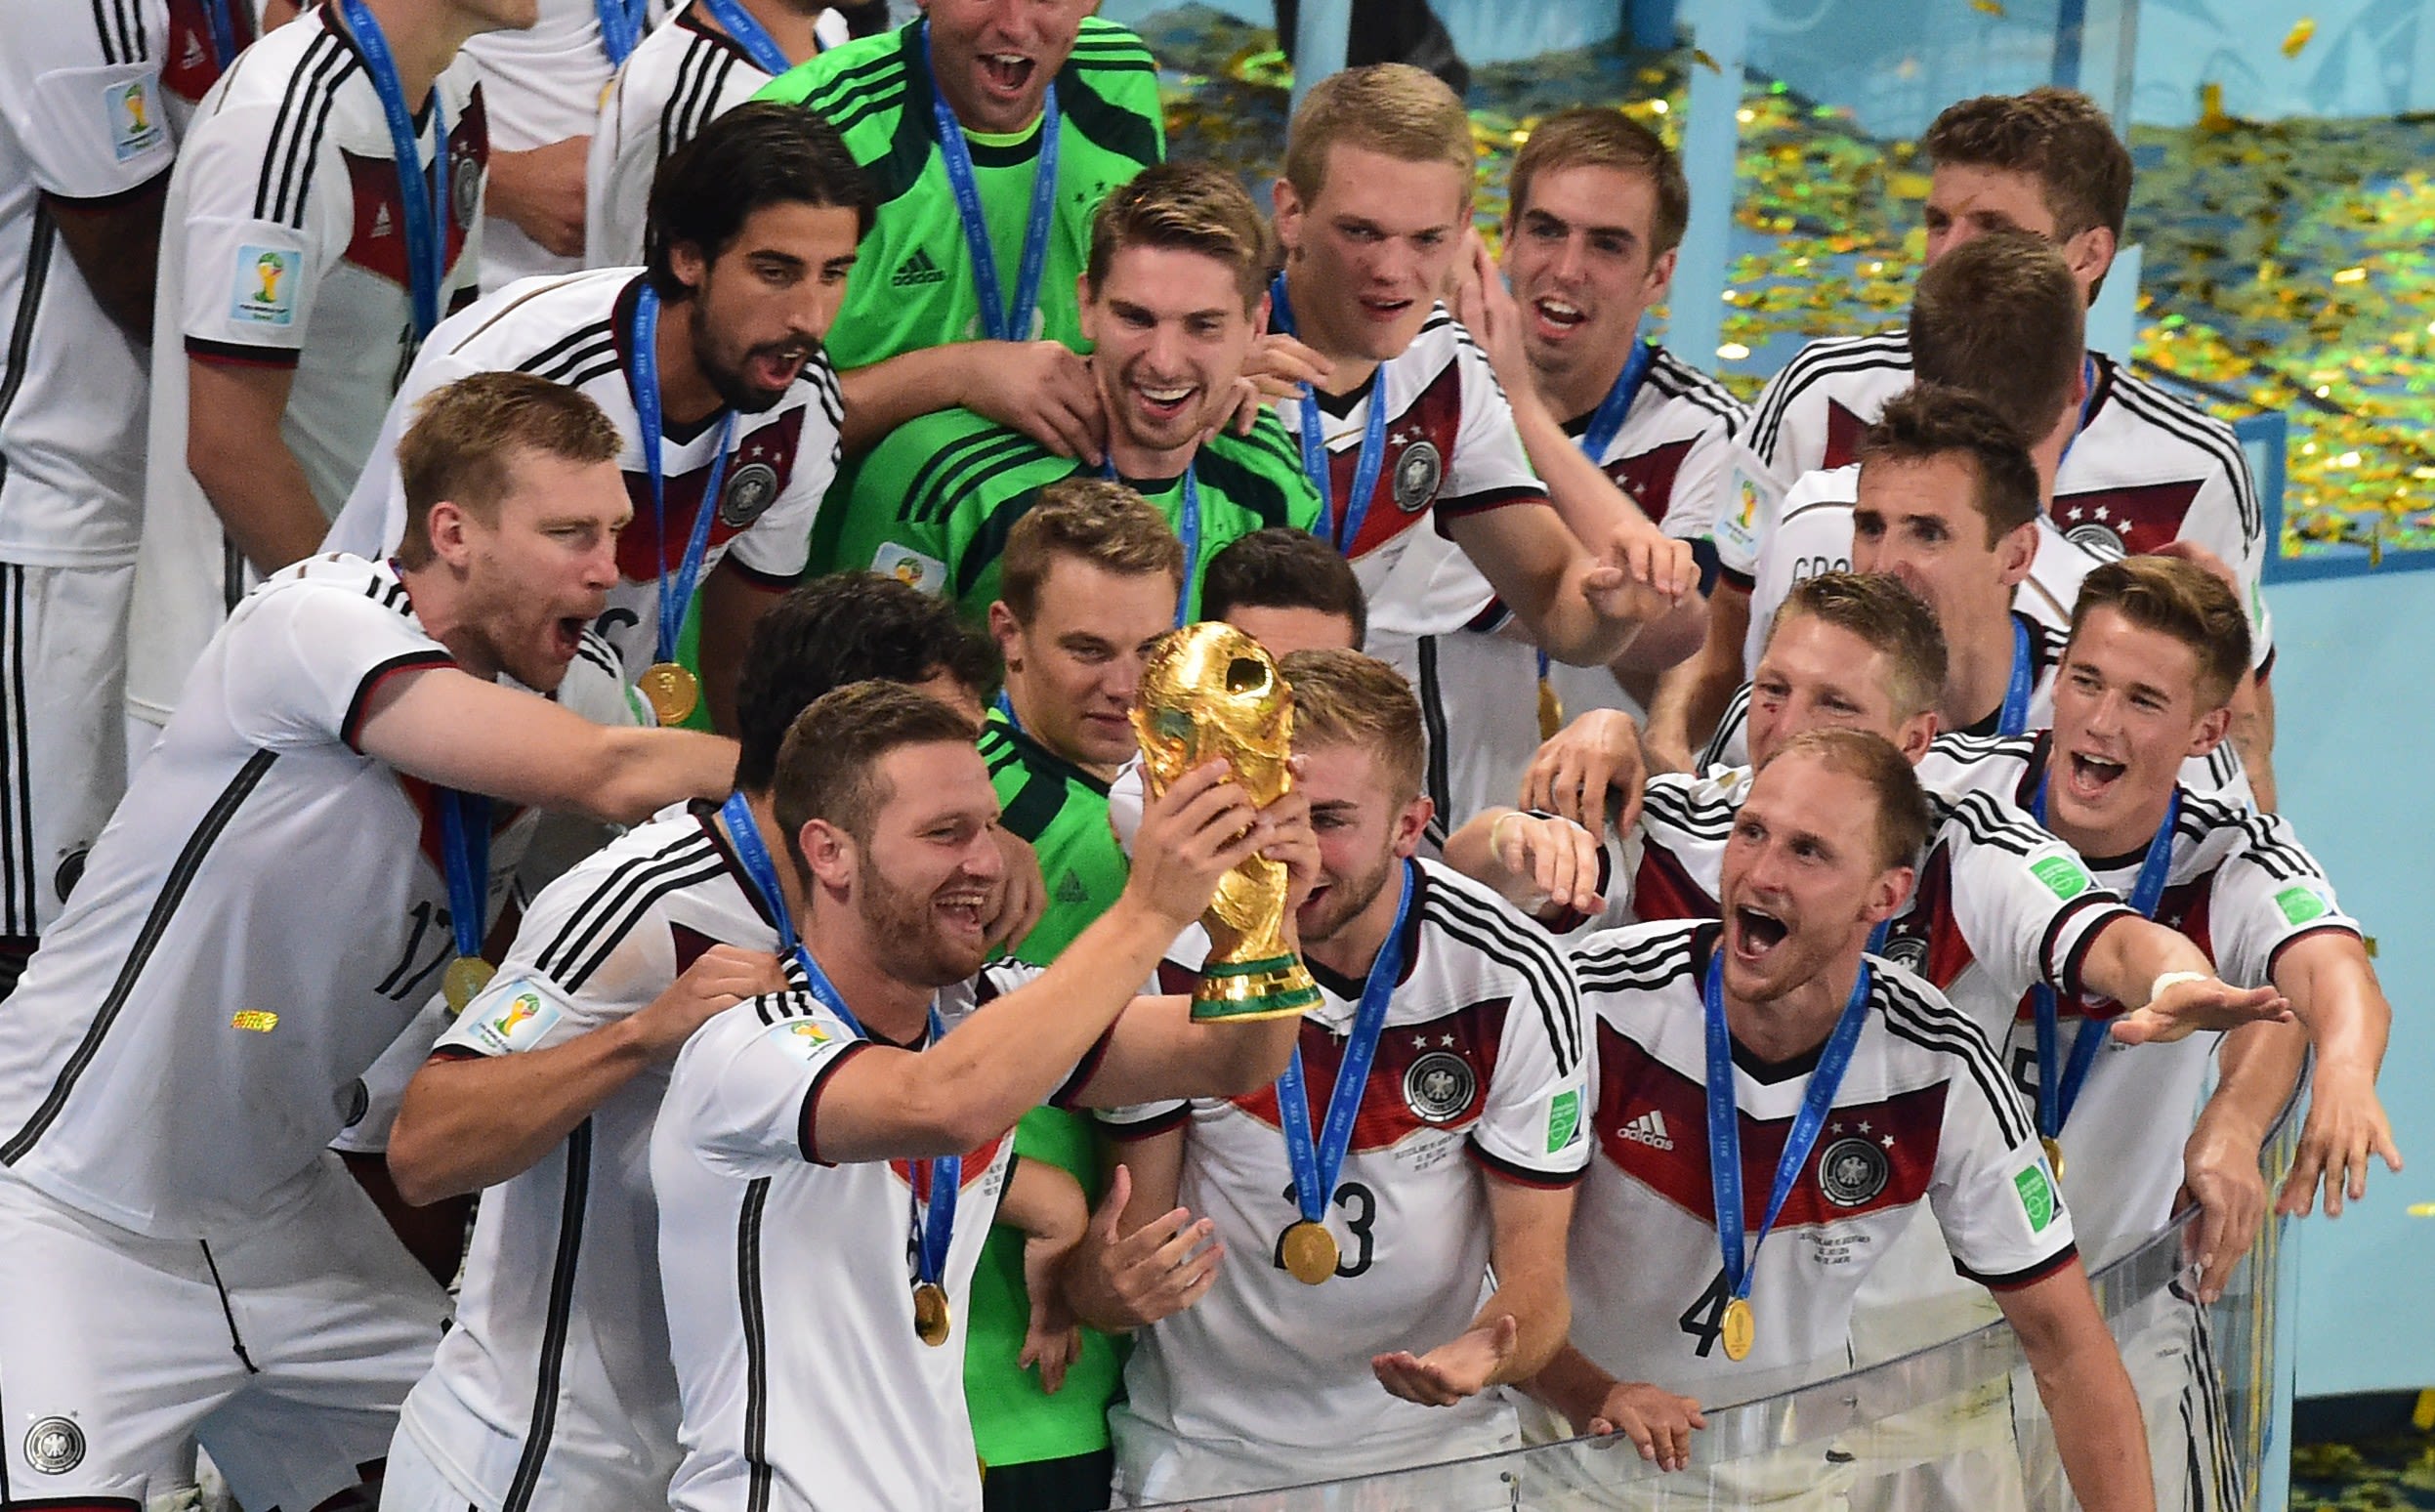 Adidas Brazuca Final Ball Germany Argentina Germany 2014 football